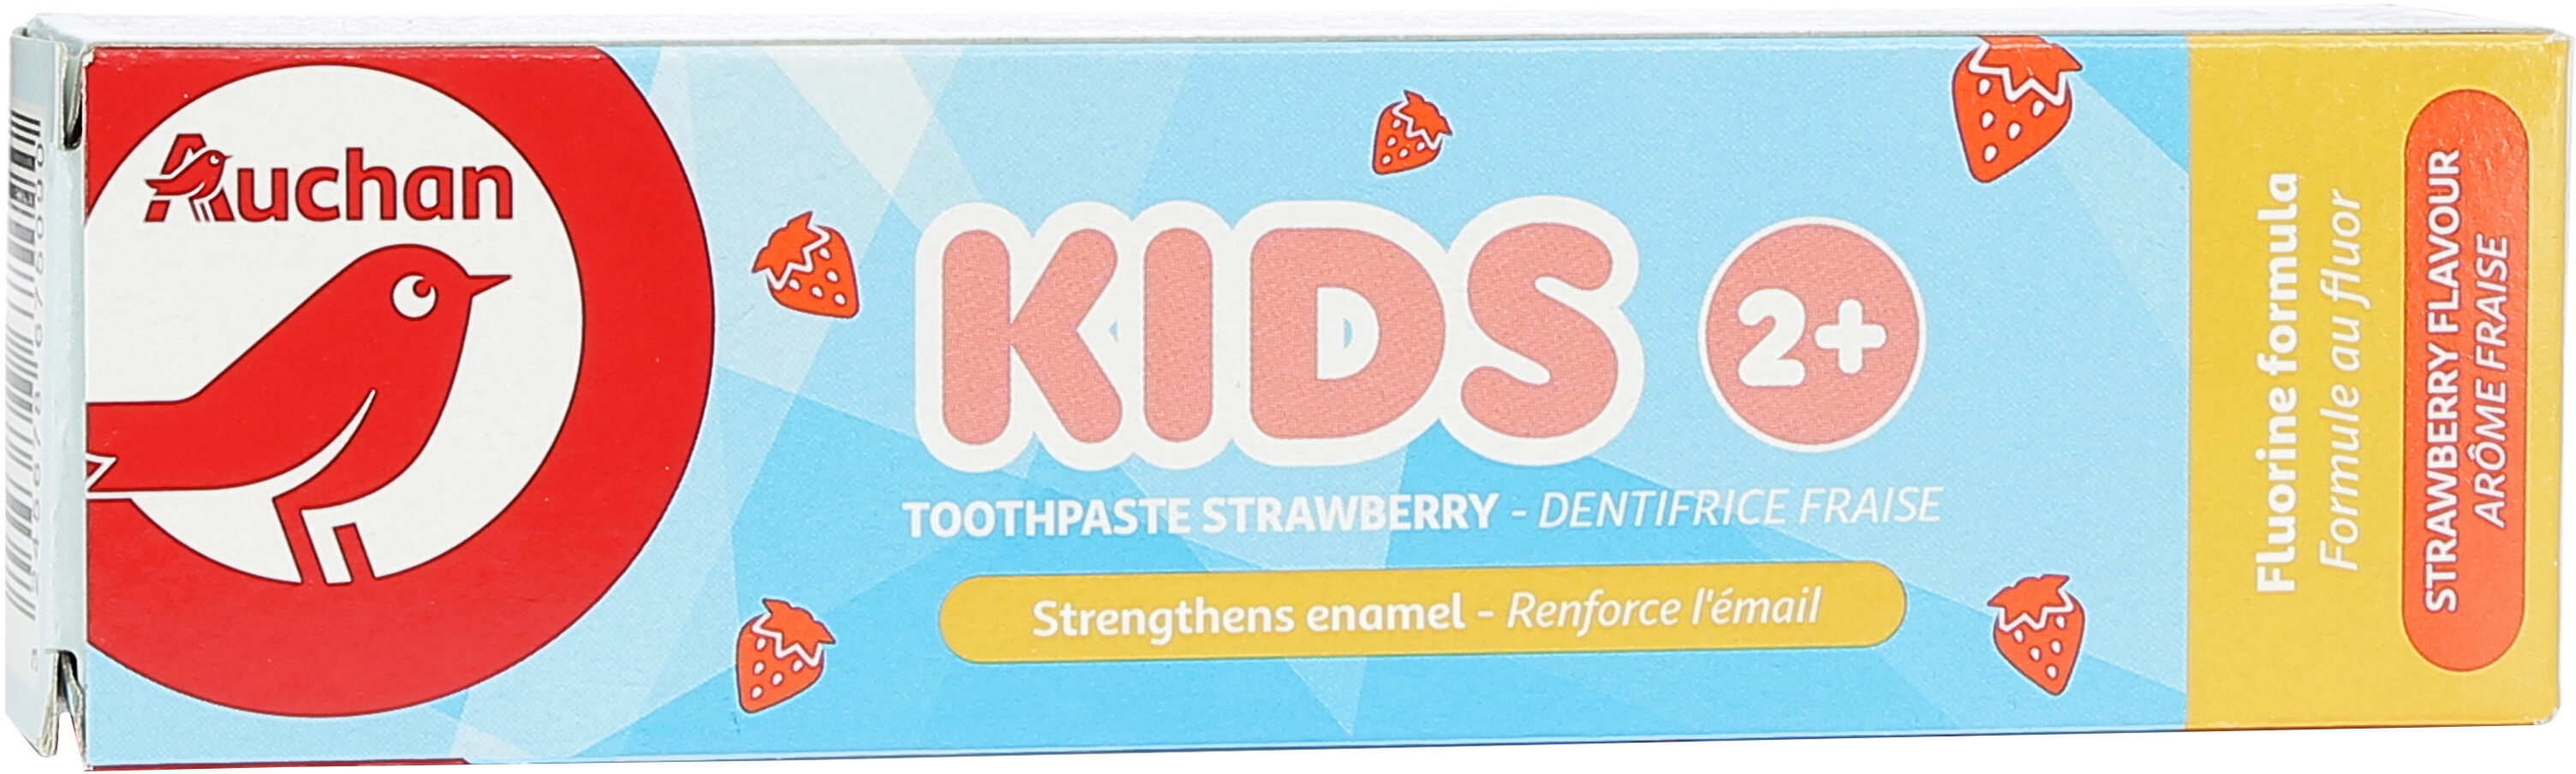 Auchan kids dentifrice - fraise - enfants 2 + - 50ml - Produkt - fr